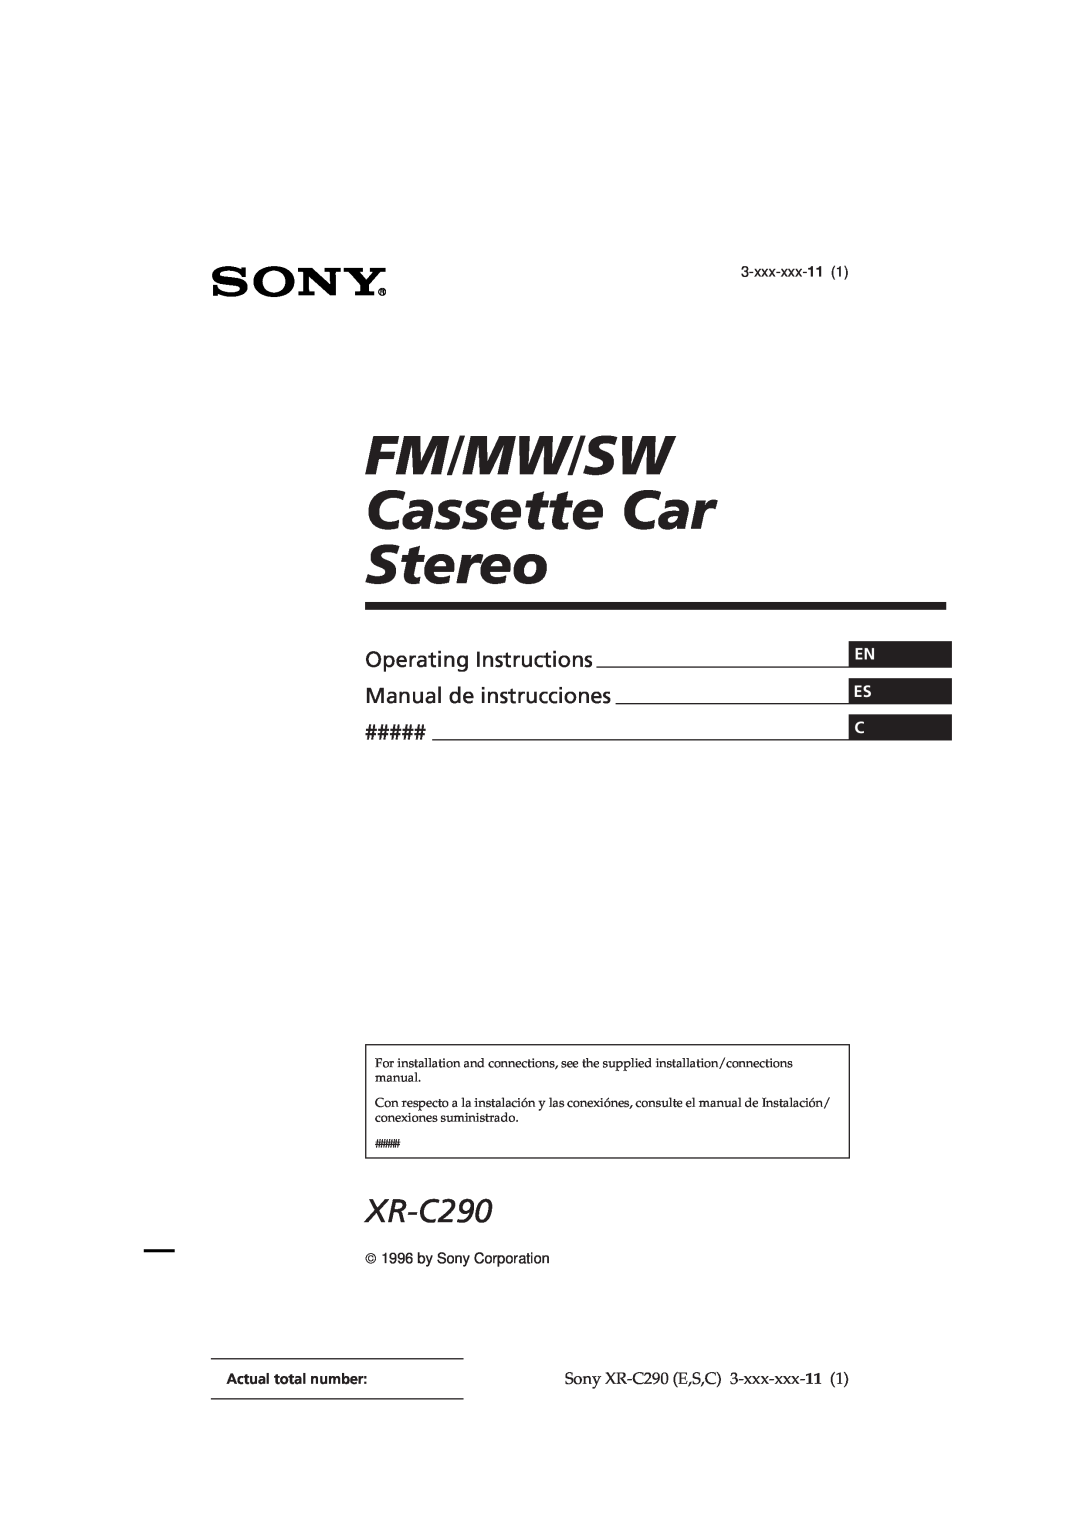 Sony manual En Es C, Sony XR-C290E,S,C, xxx-xxx-11, by Sony Corporation, FM/MW/SW Cassette Car Stereo, ##### 